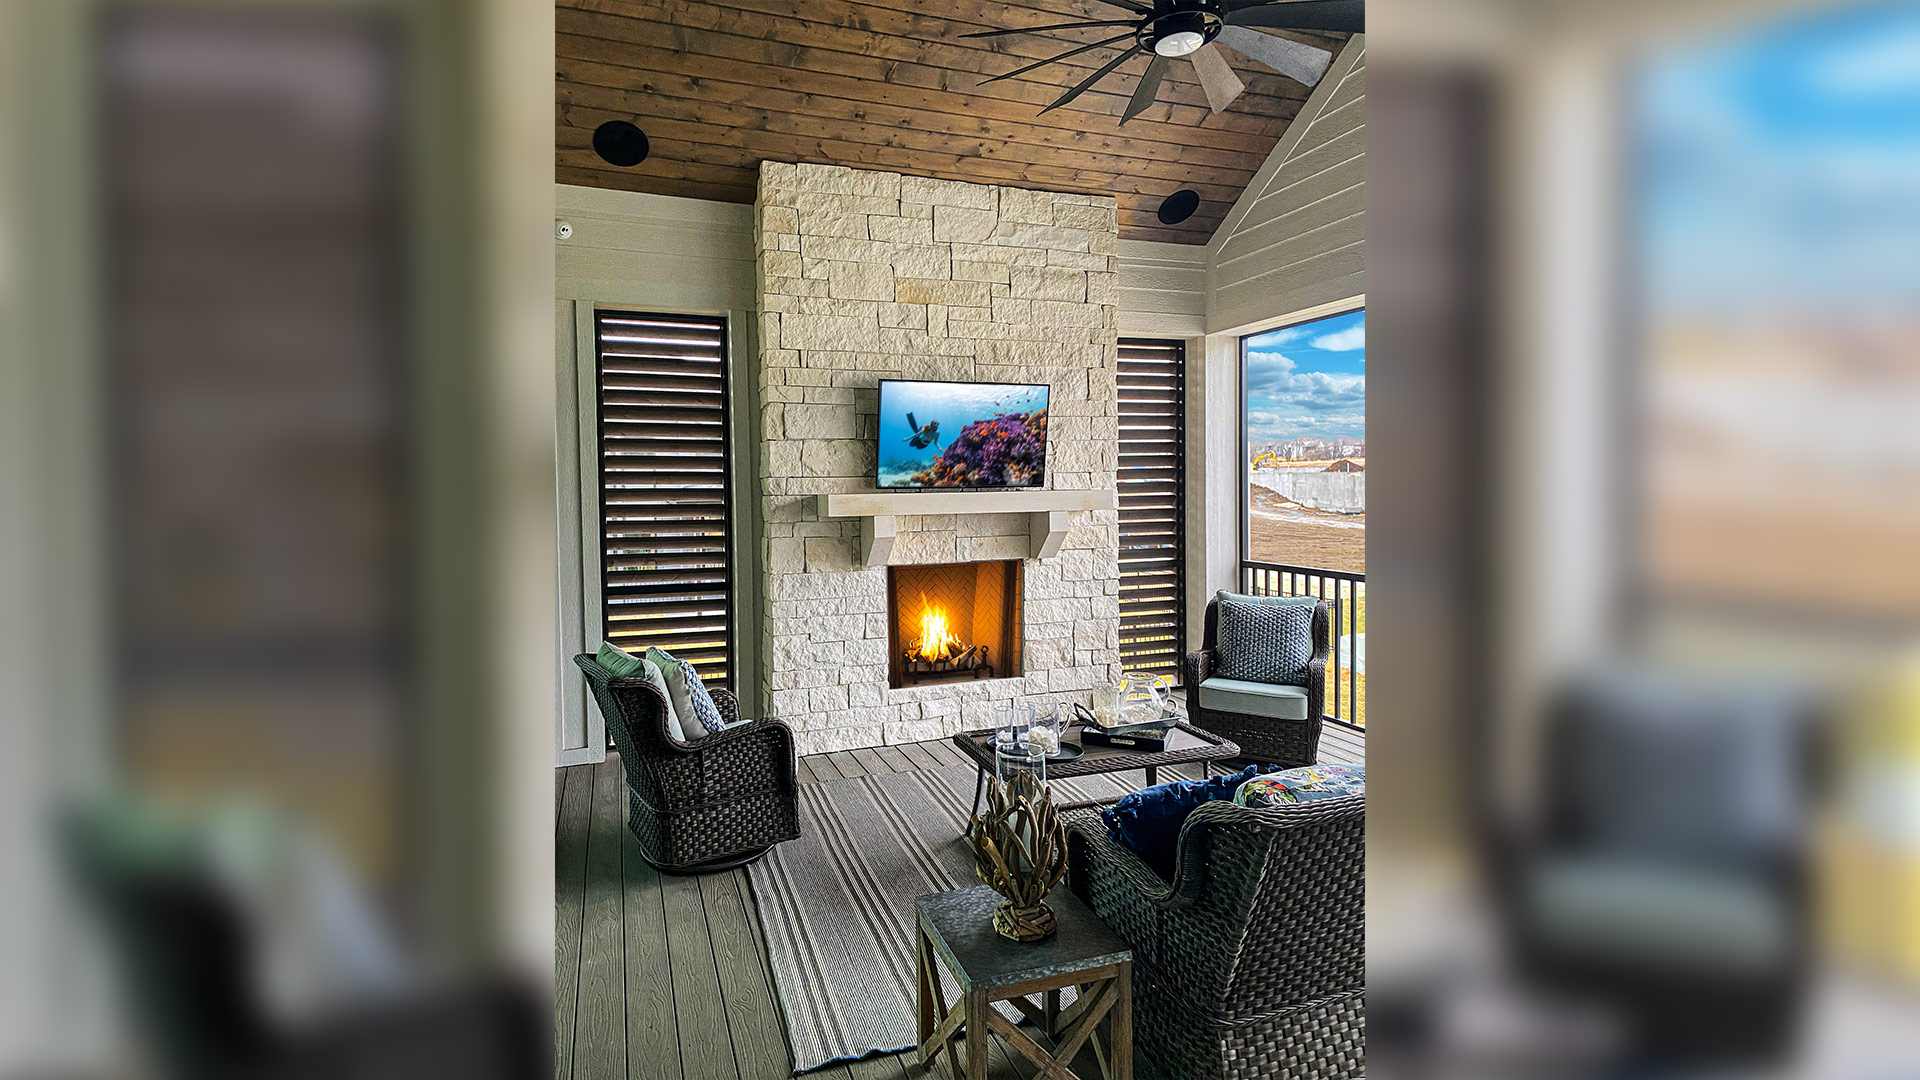 Stella Neo Ledge: Split natural stone thin veneer installed on interior fireplace.